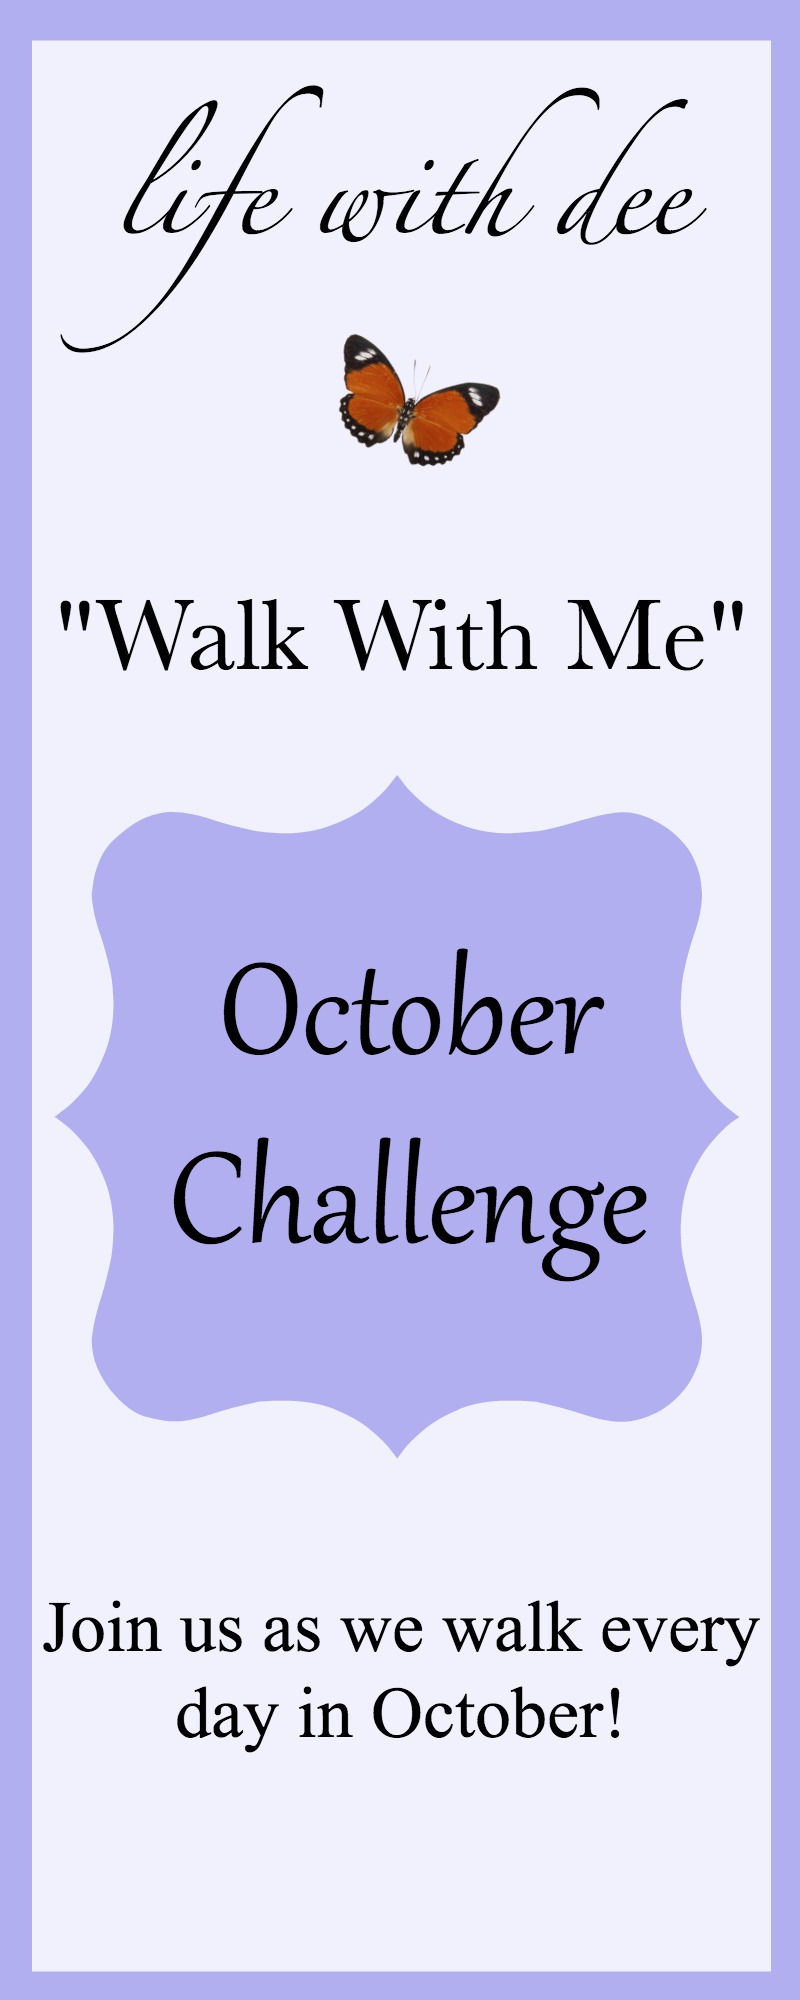 Walk With Me Challenge